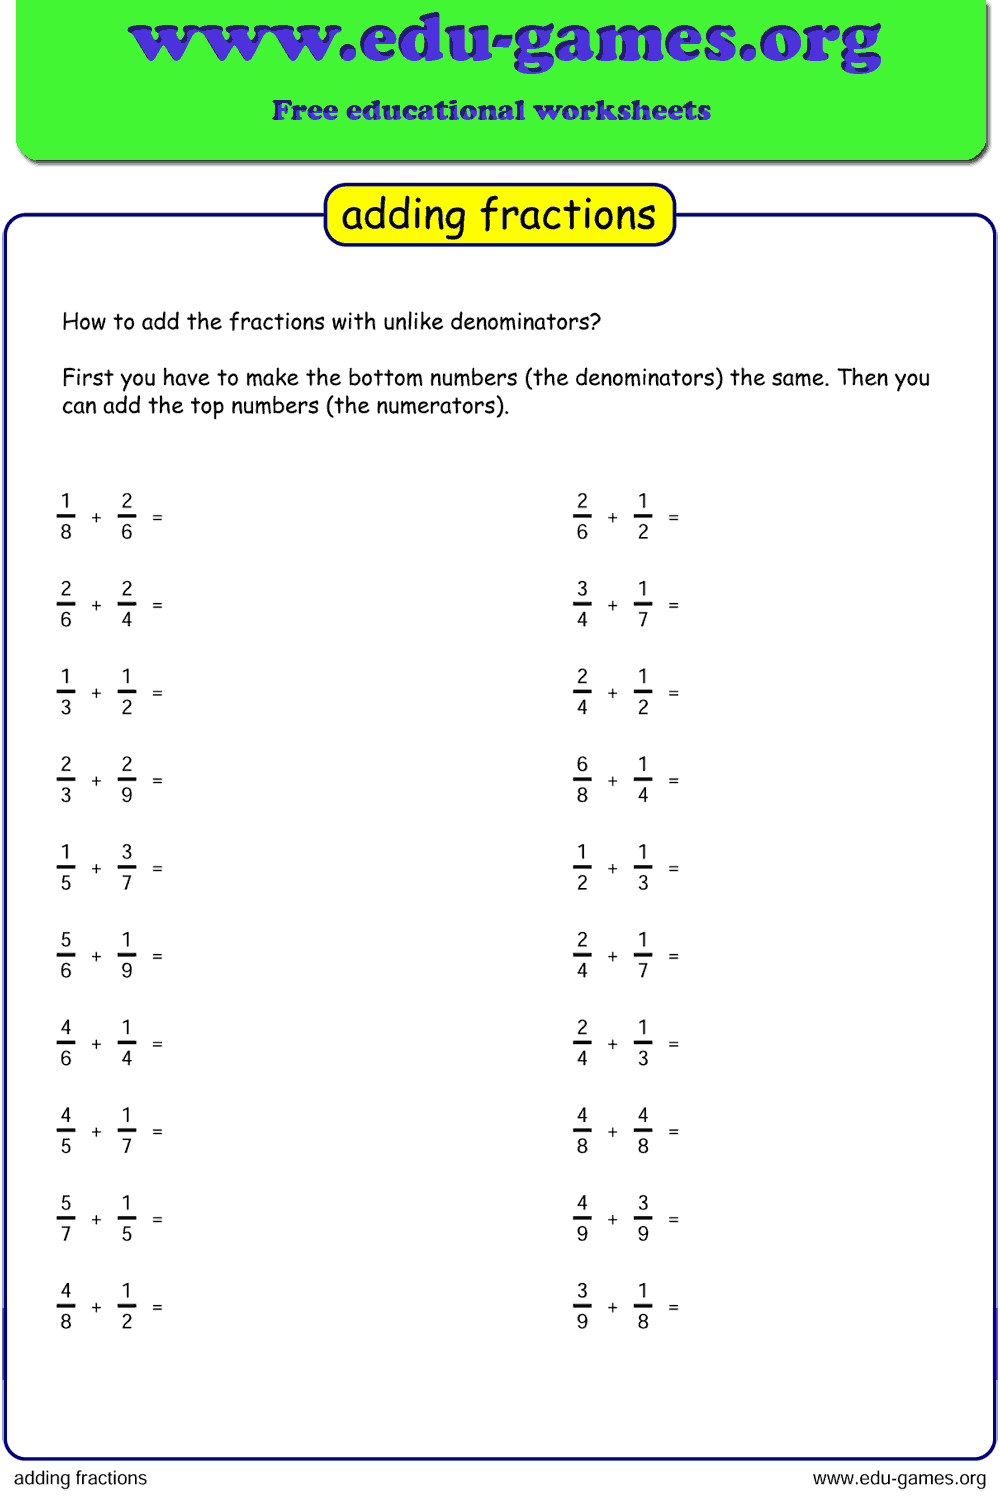 basic fraction addition worksheets with unlike denominators under 10